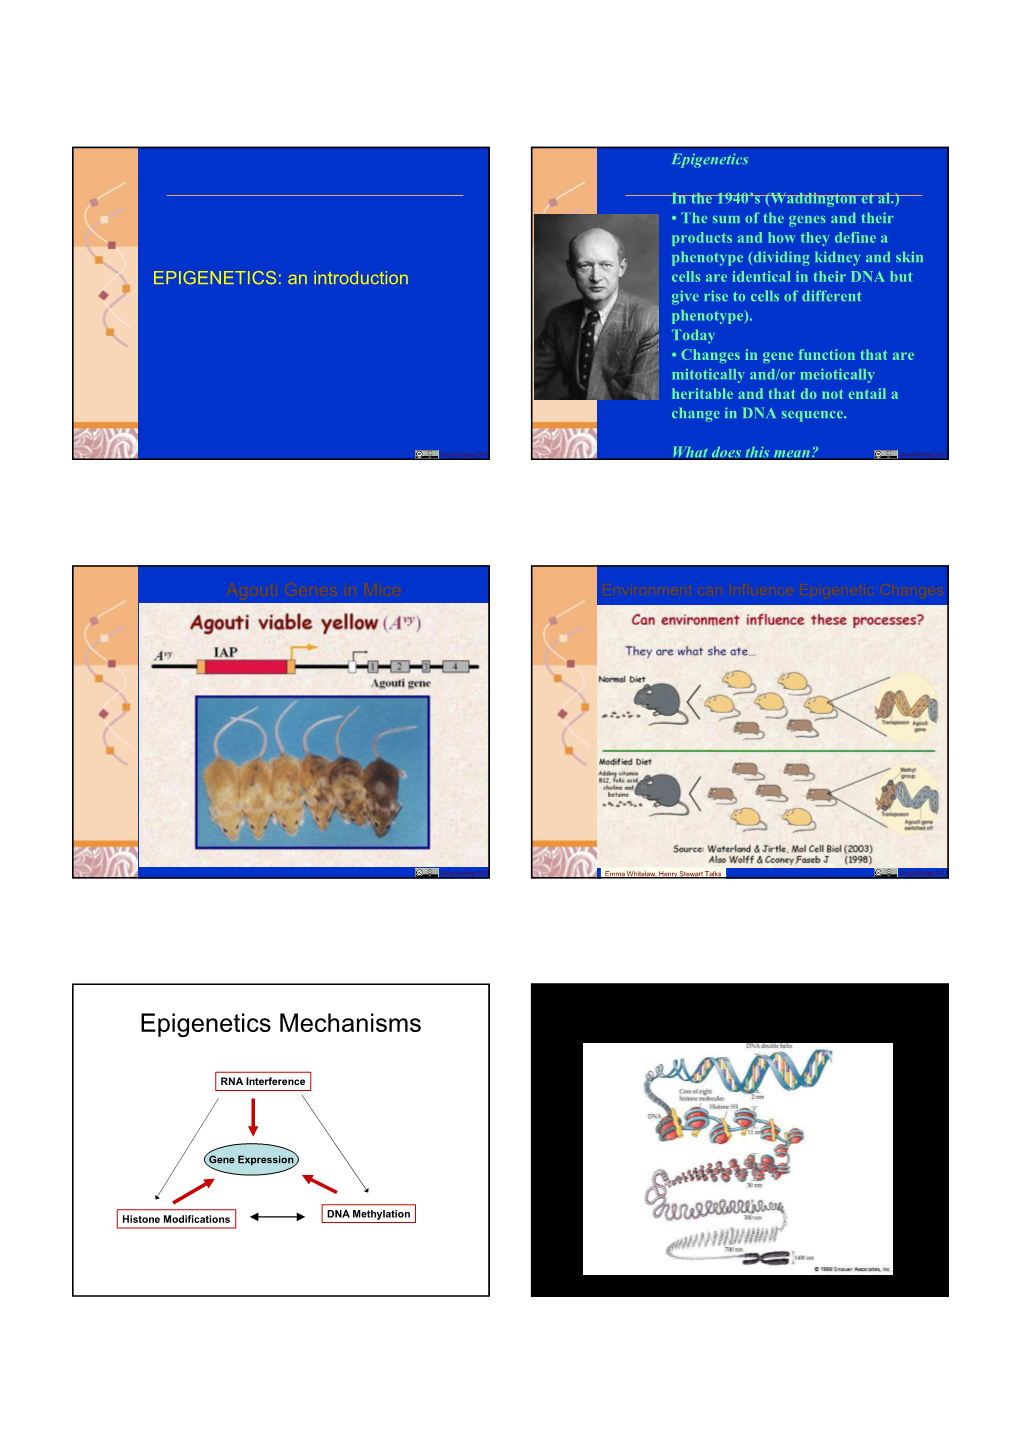 Epigenetics Mechanisms